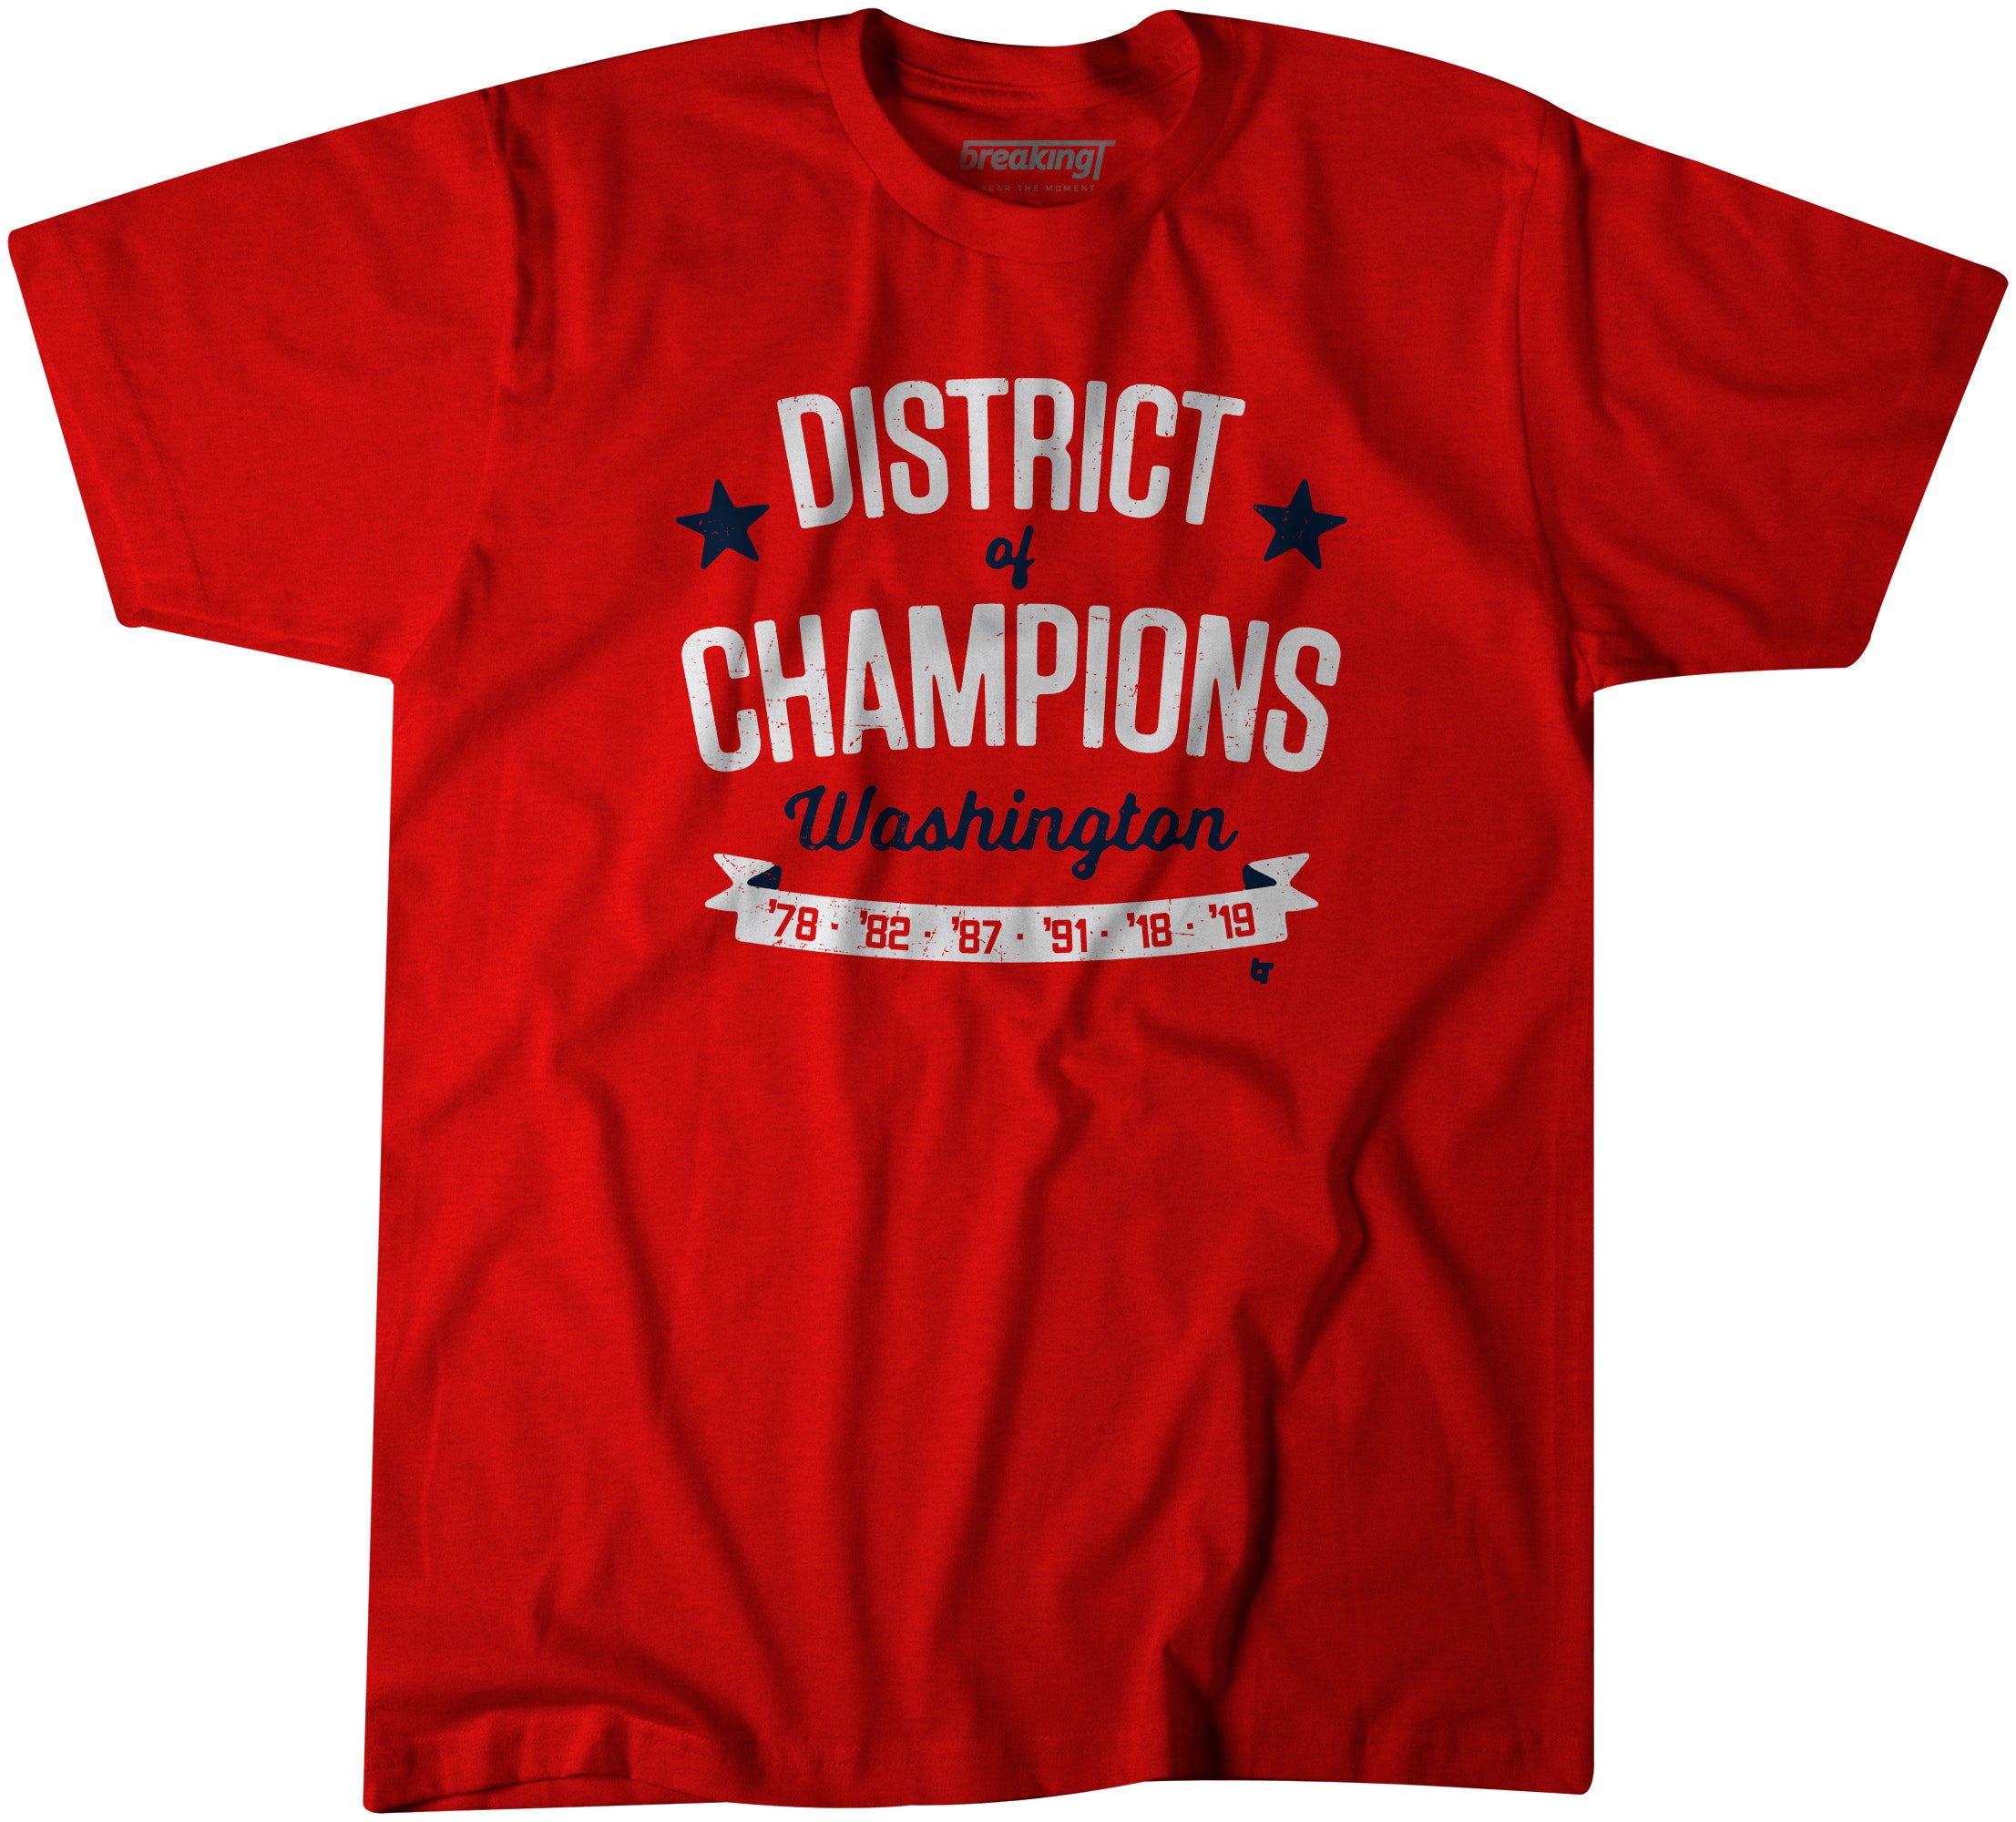 T Shirt of Champions 